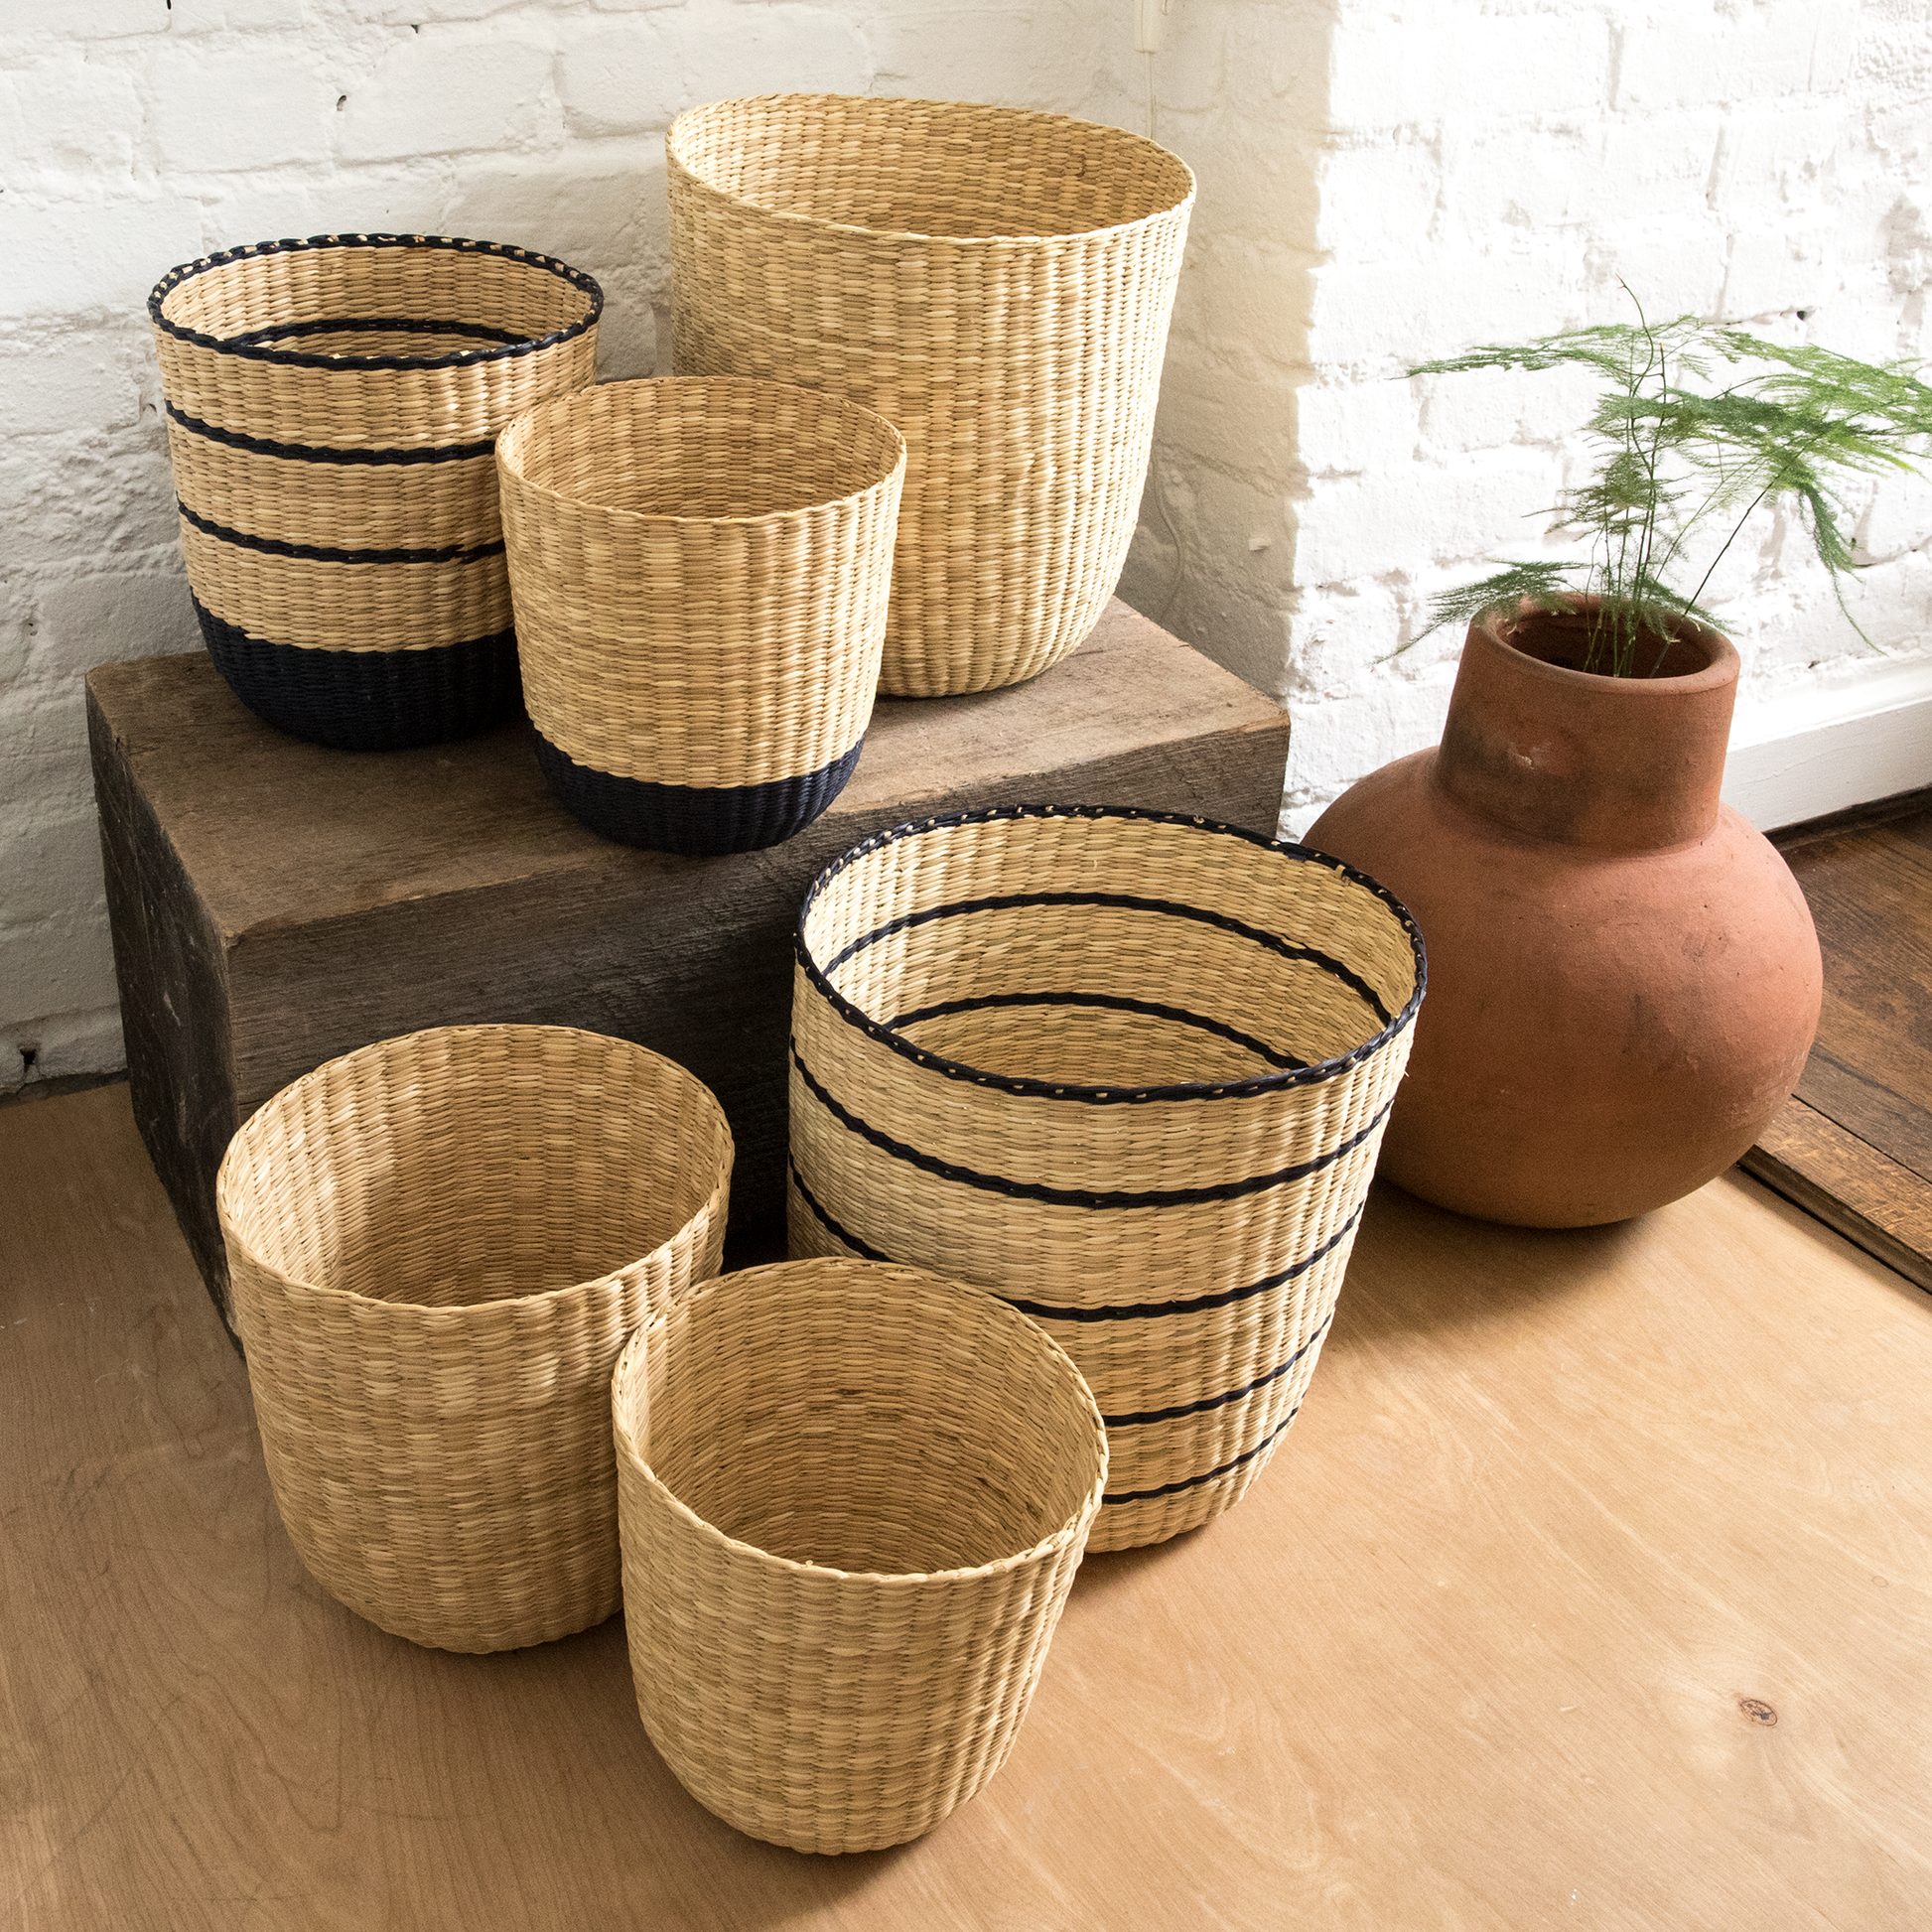 Intiearth Junco Nesting Baskets with black stripe, Peruvian Home decor, woven natural handmade stacking basket trio